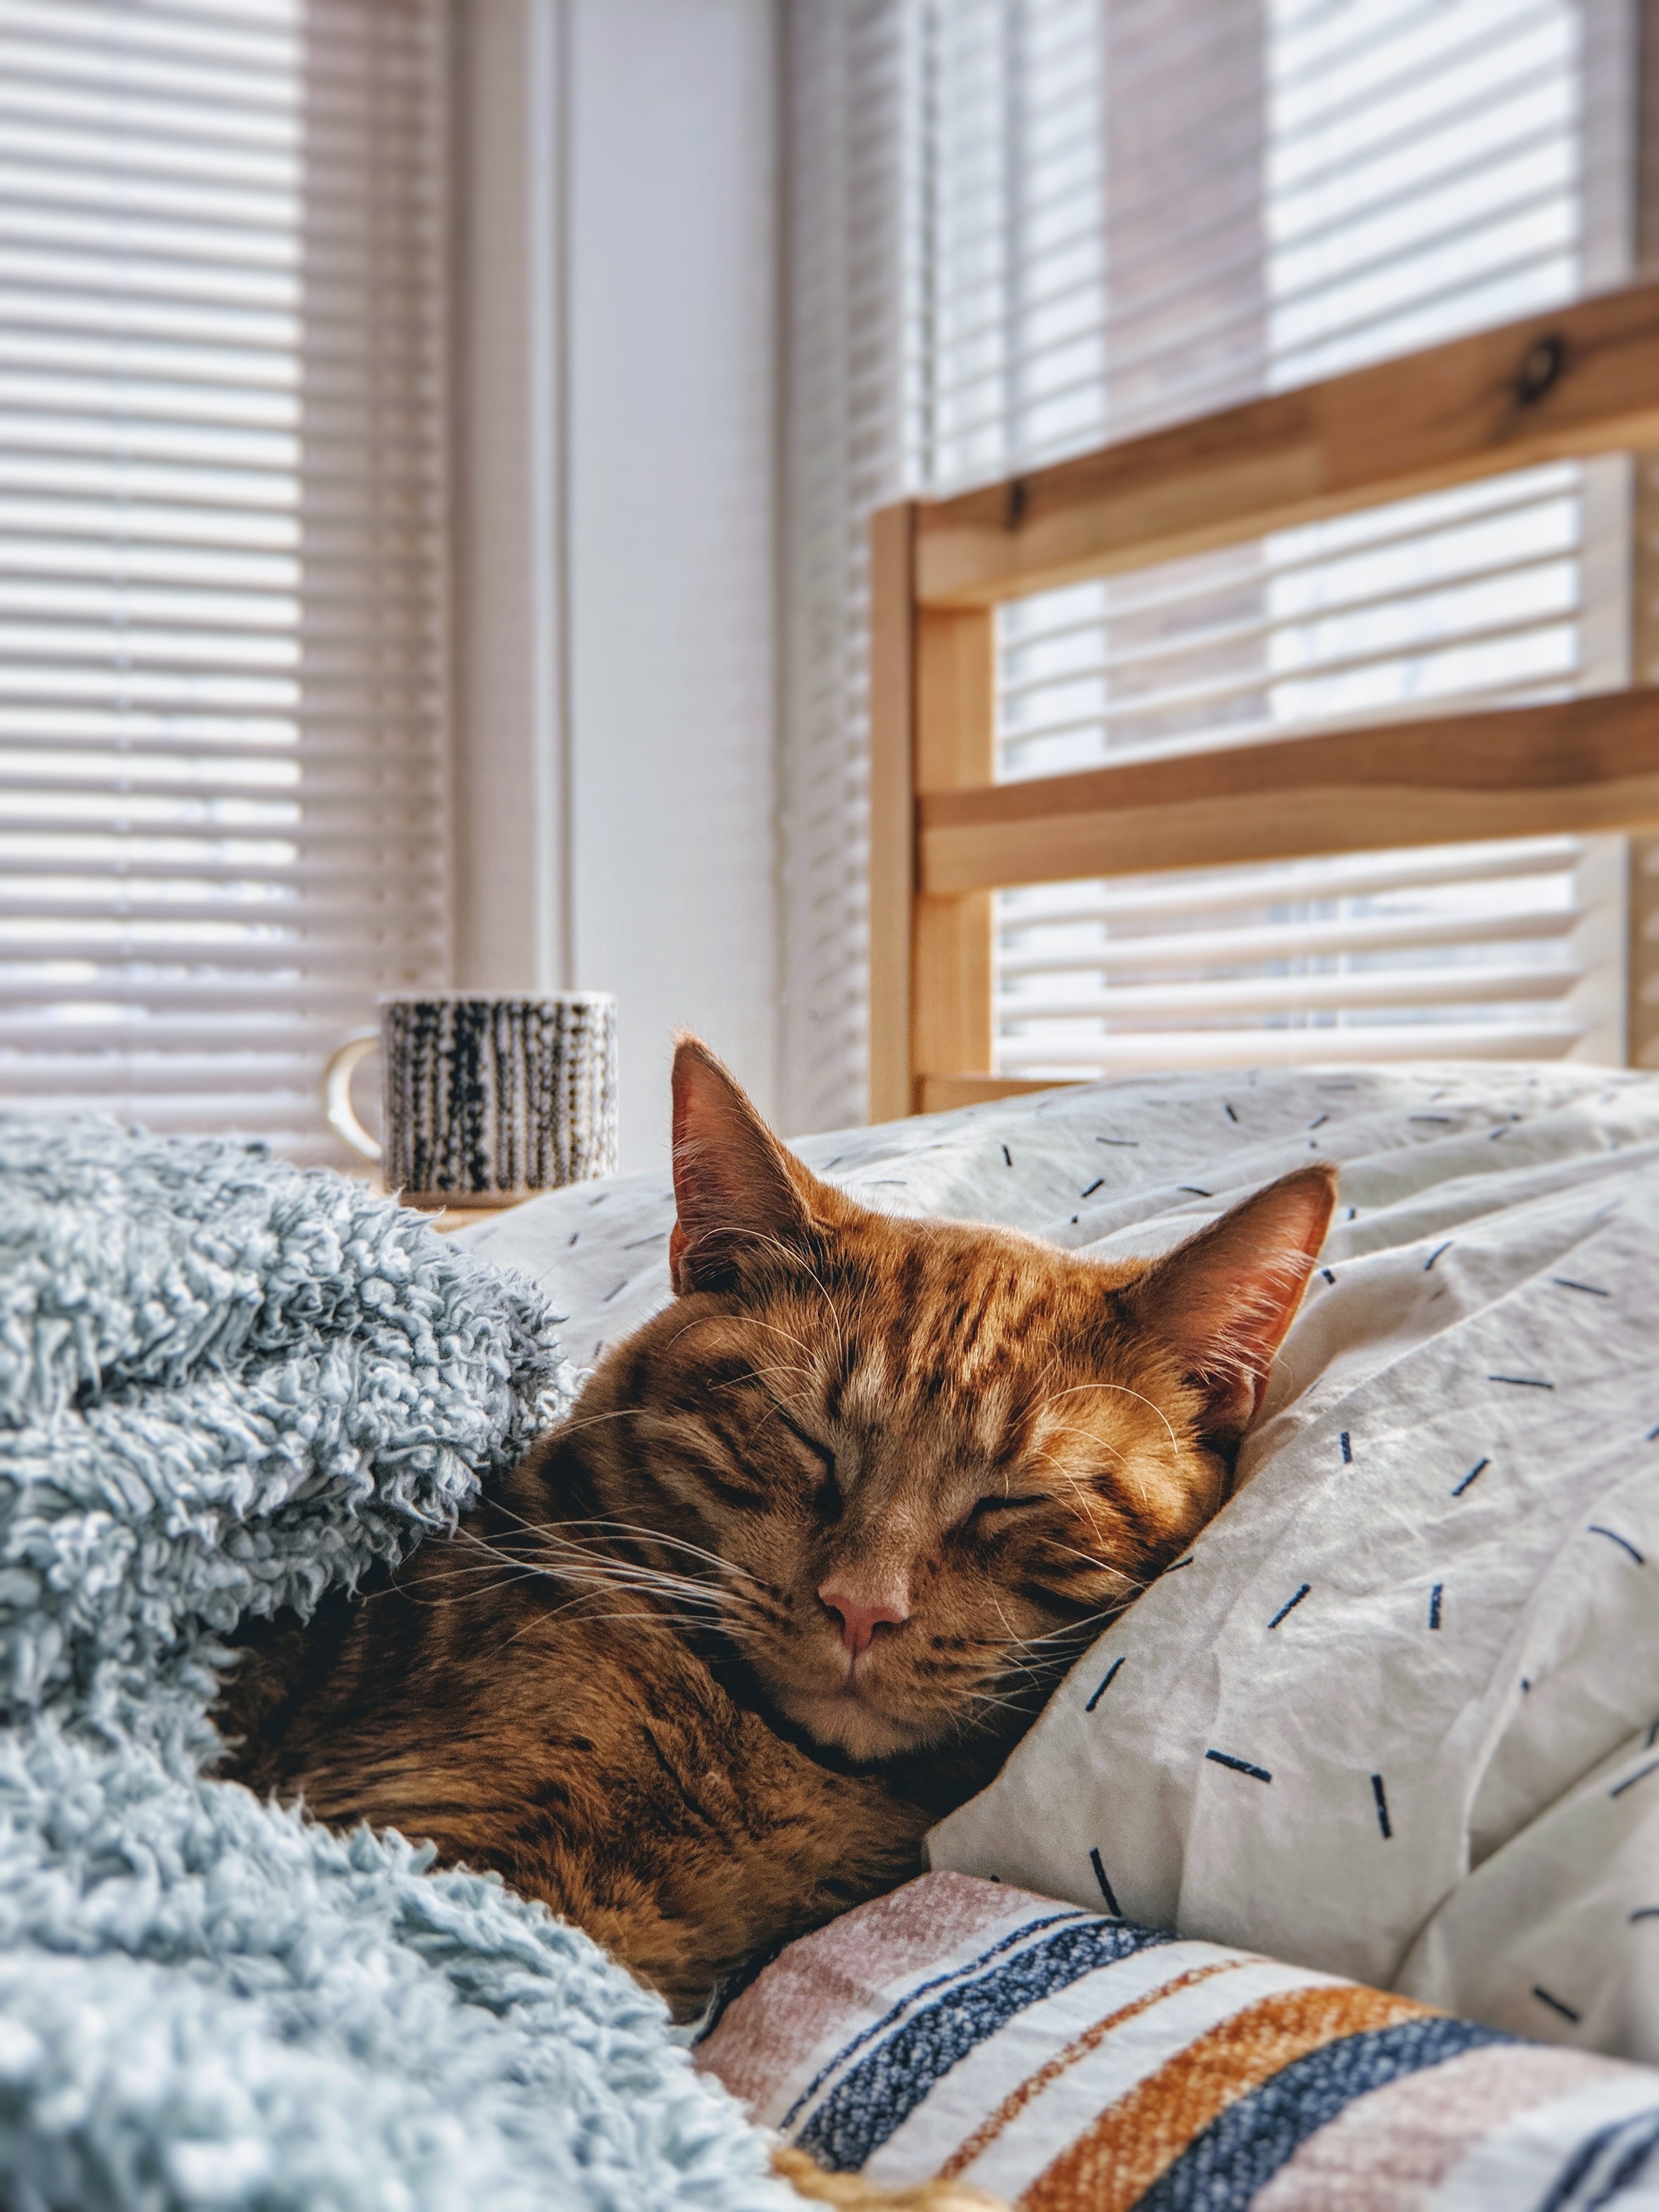 iPhone Wallpapers coziness, sleep, animals, comfort Bed